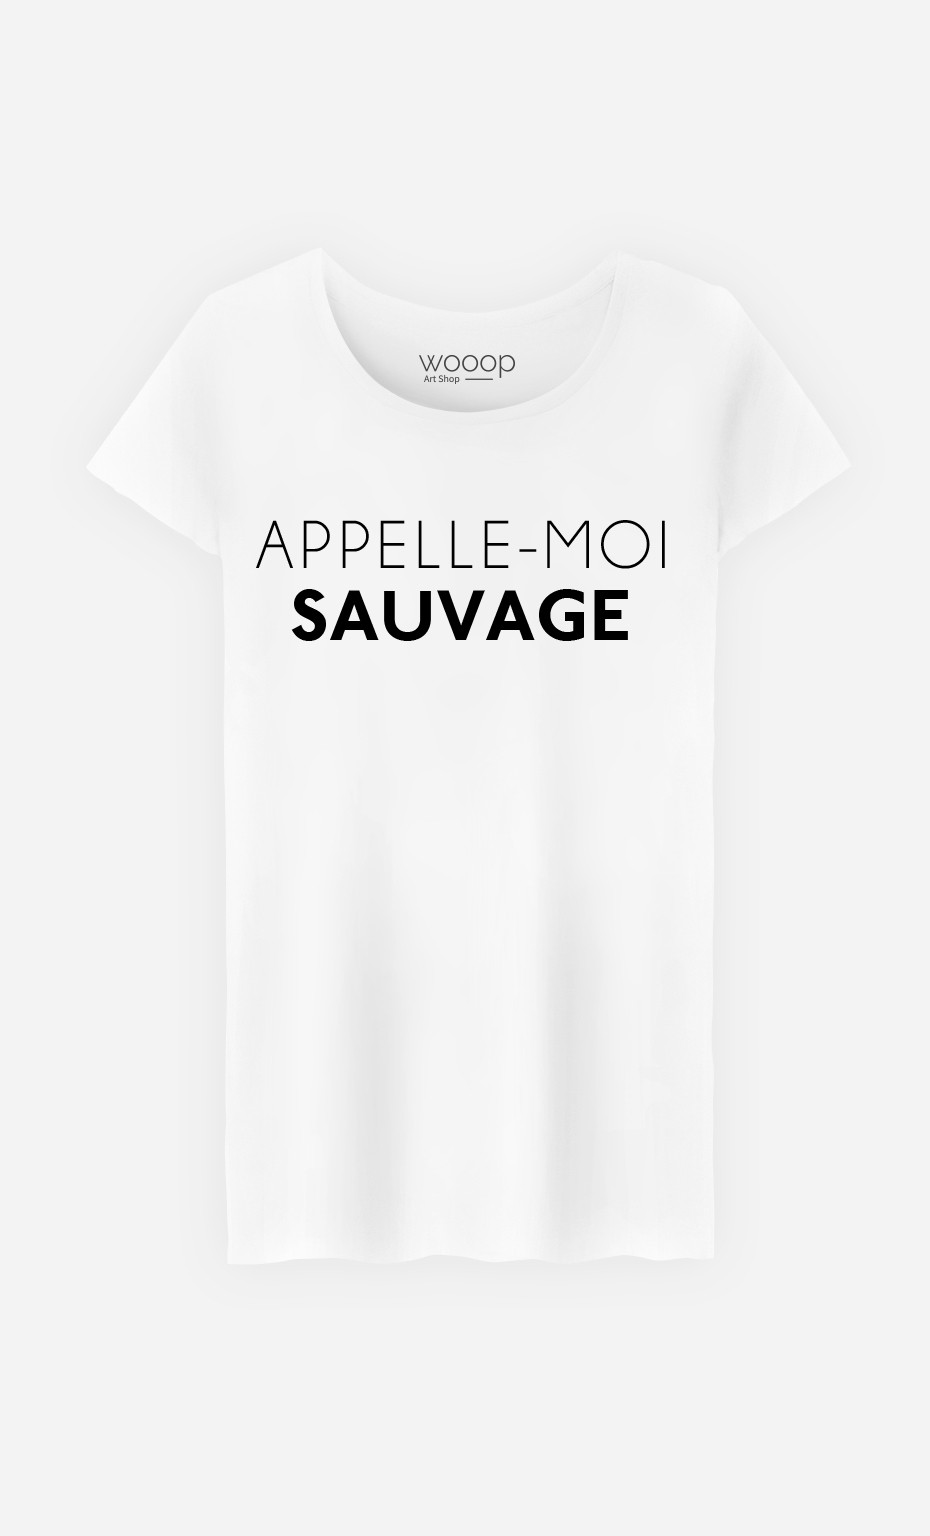 T-Shirt Femme Appelle-Moi Sauvage